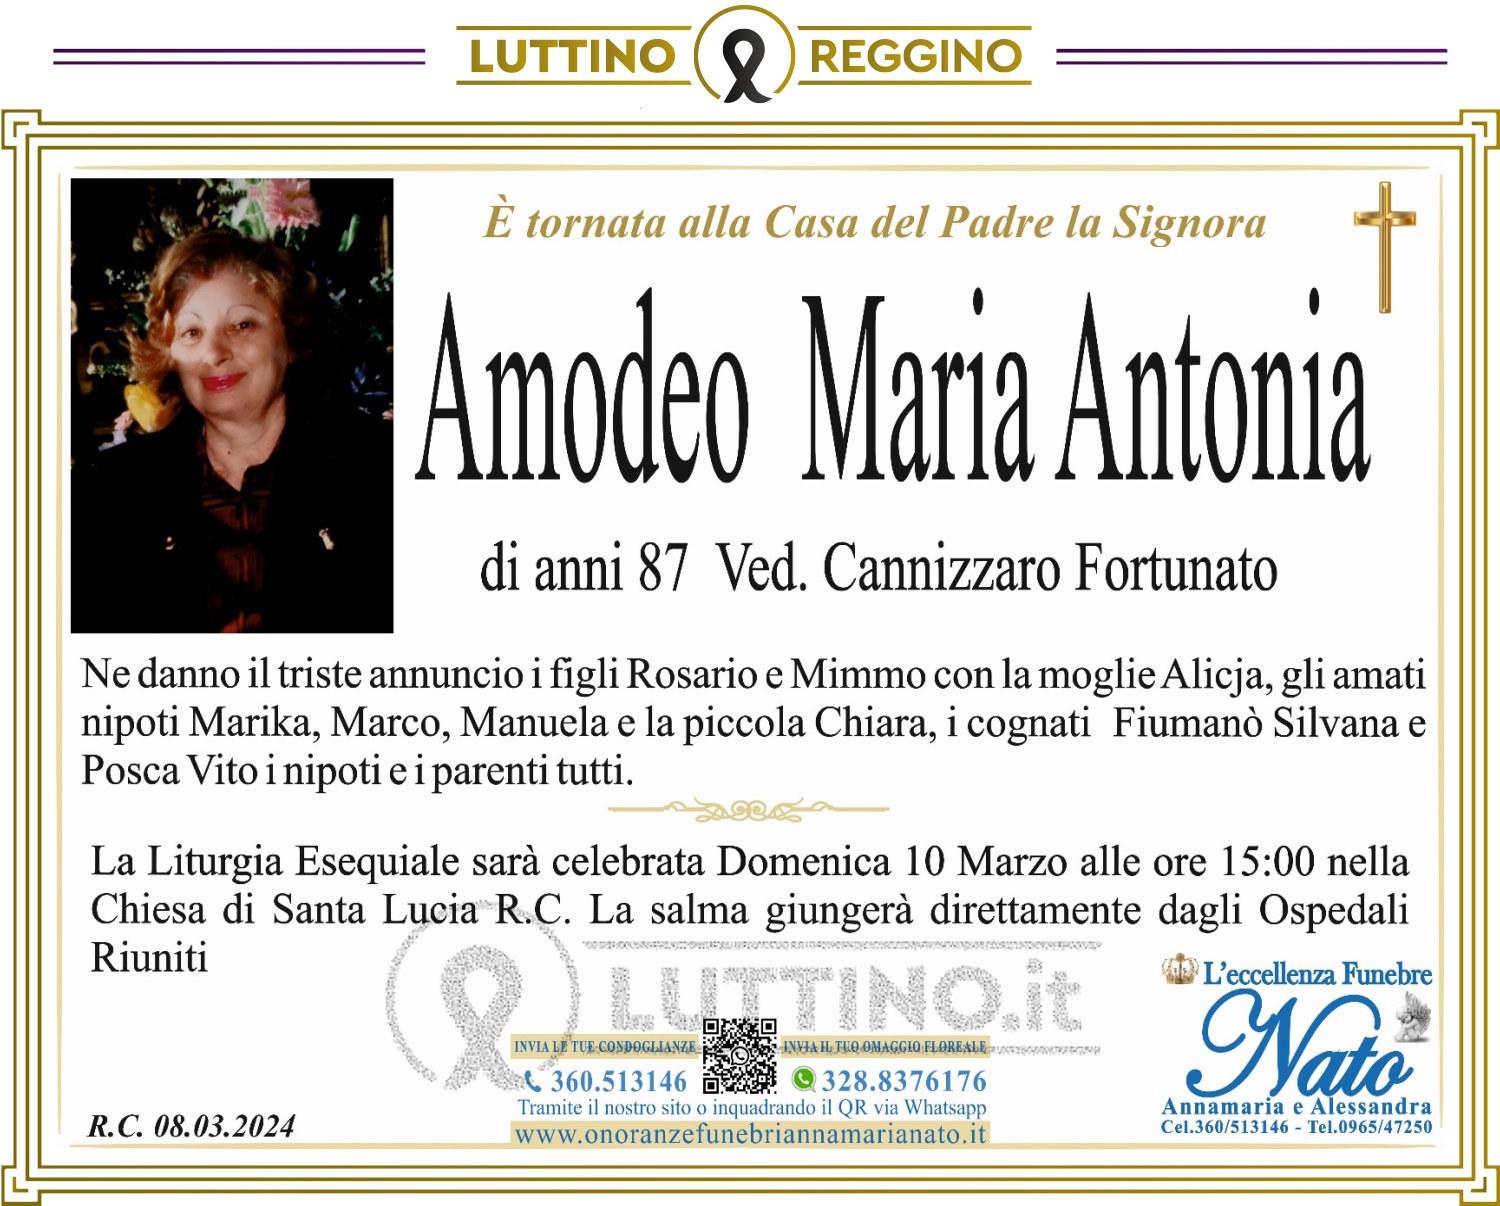 Maria Antonia Amodeo